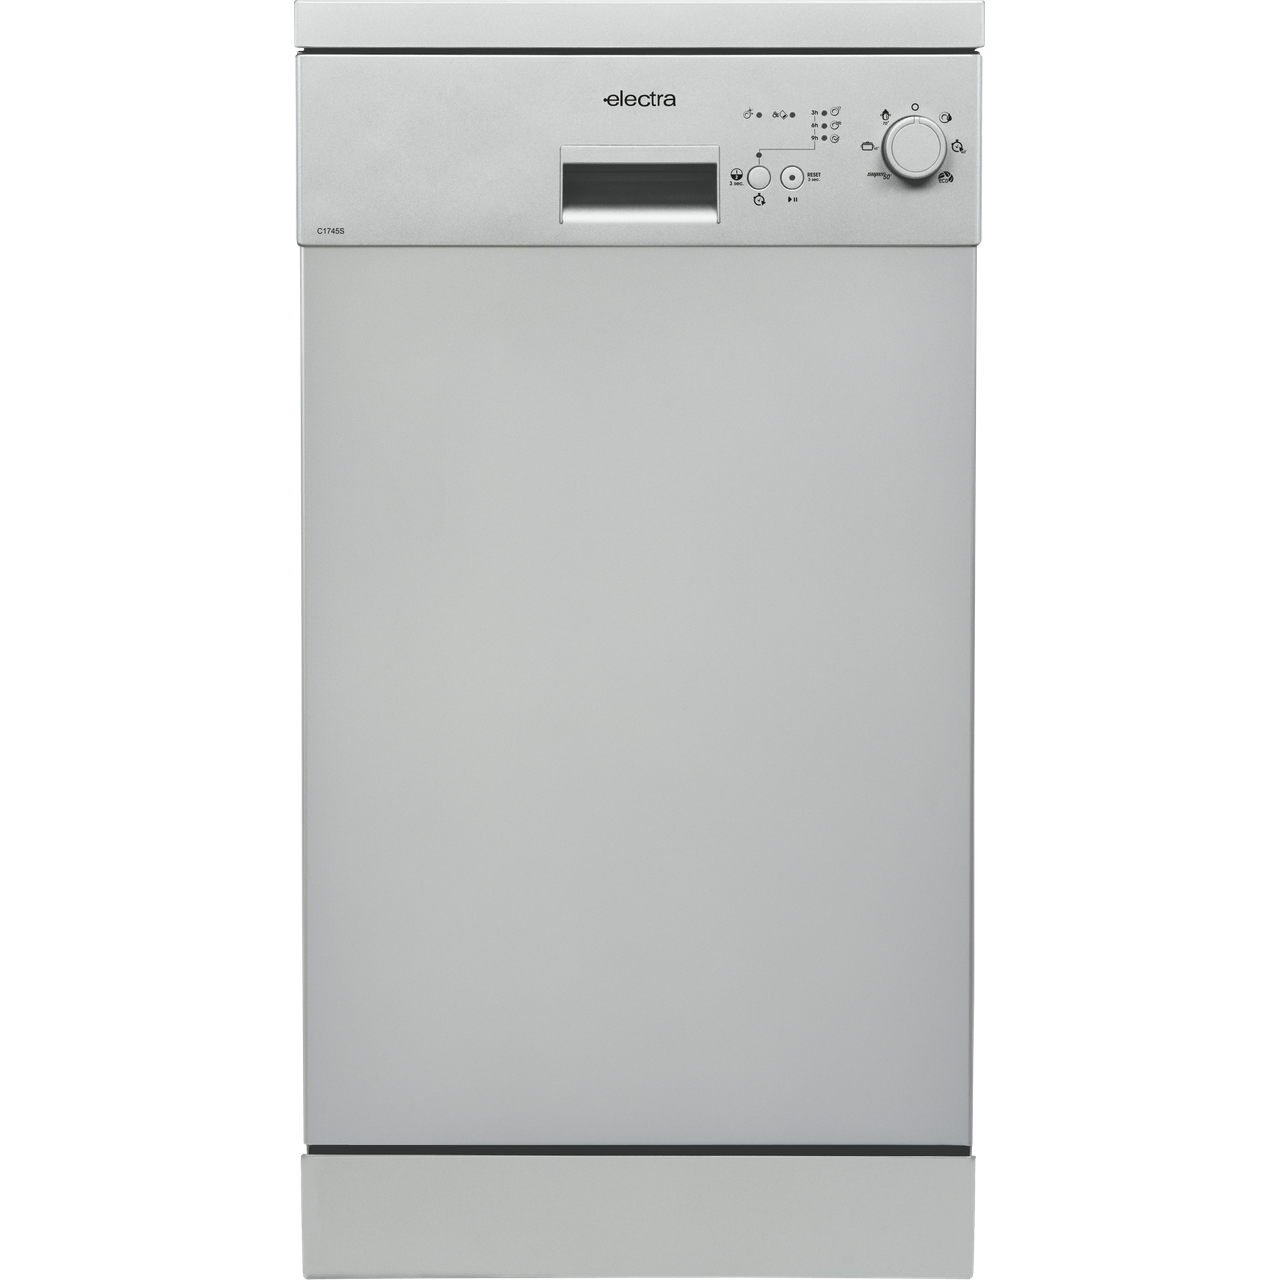 Electra C1745S Slimline Dishwasher Review